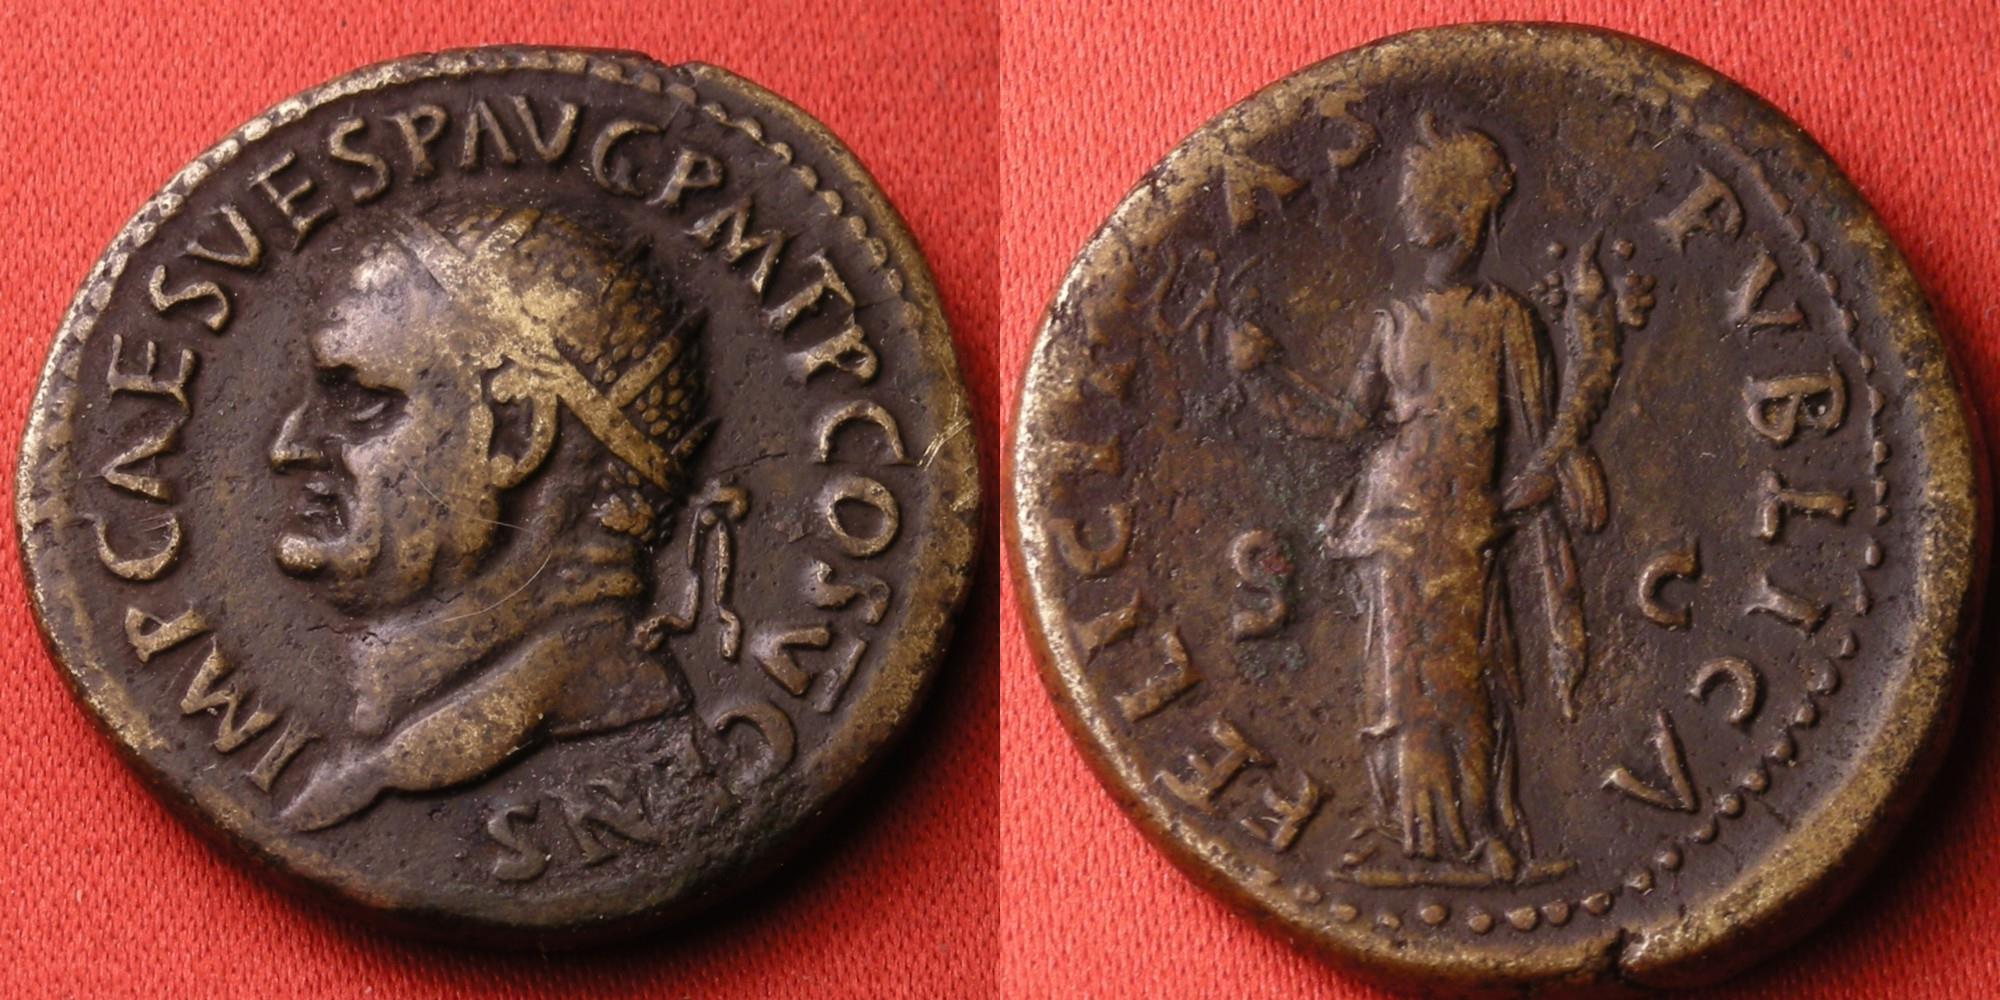 Dupondius - Vespasian (FIDES PVBLICA S C; Fides) - Roman Empire